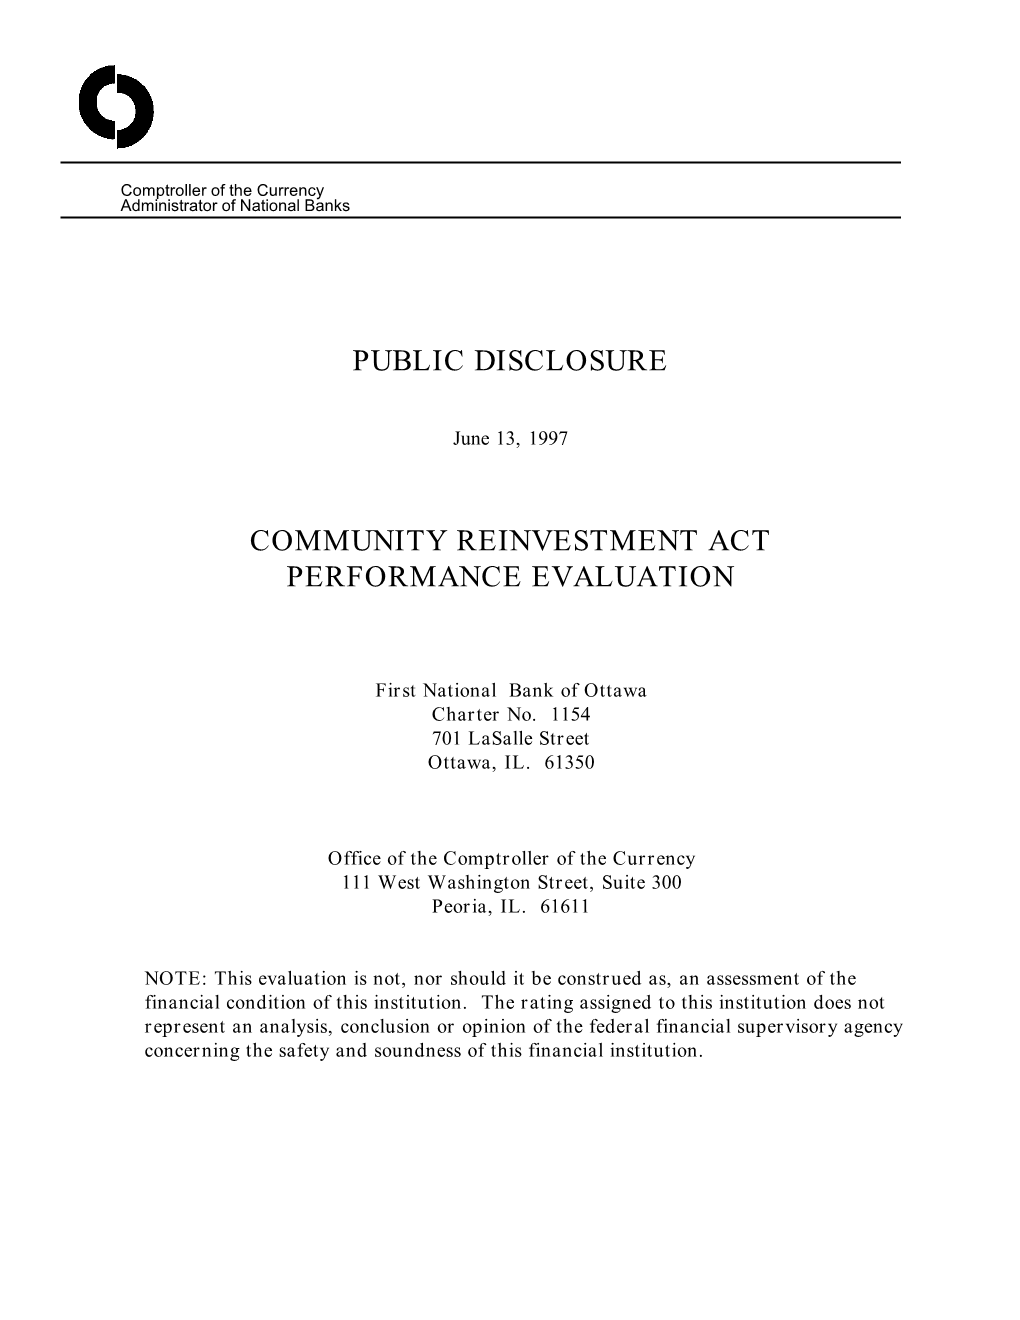 Public Disclosure Community Reinvestment Act